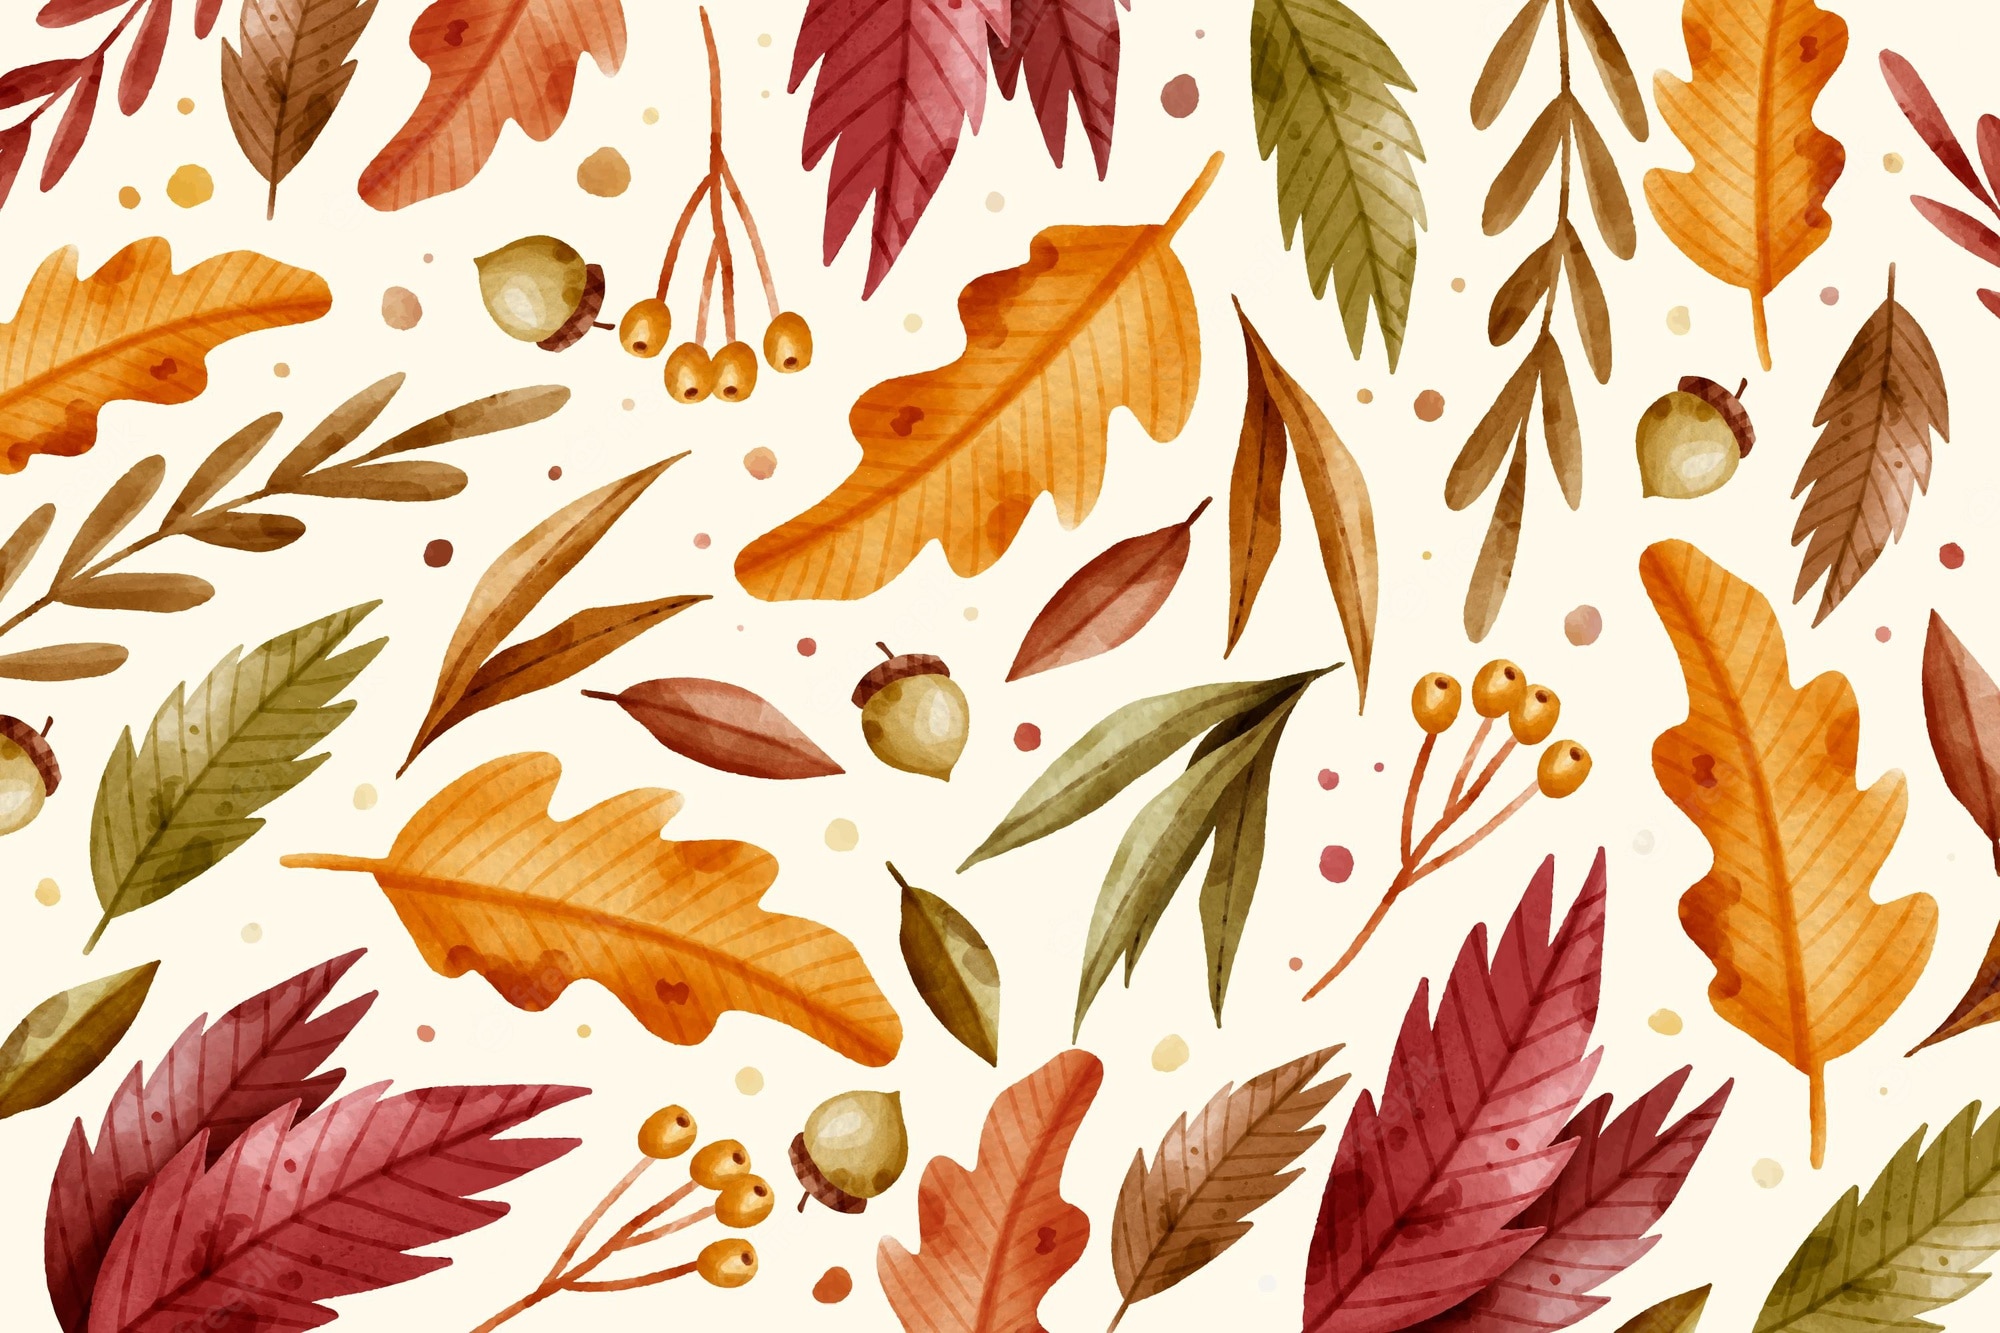 Watercolor autumn Image. Free Vectors, & PSD